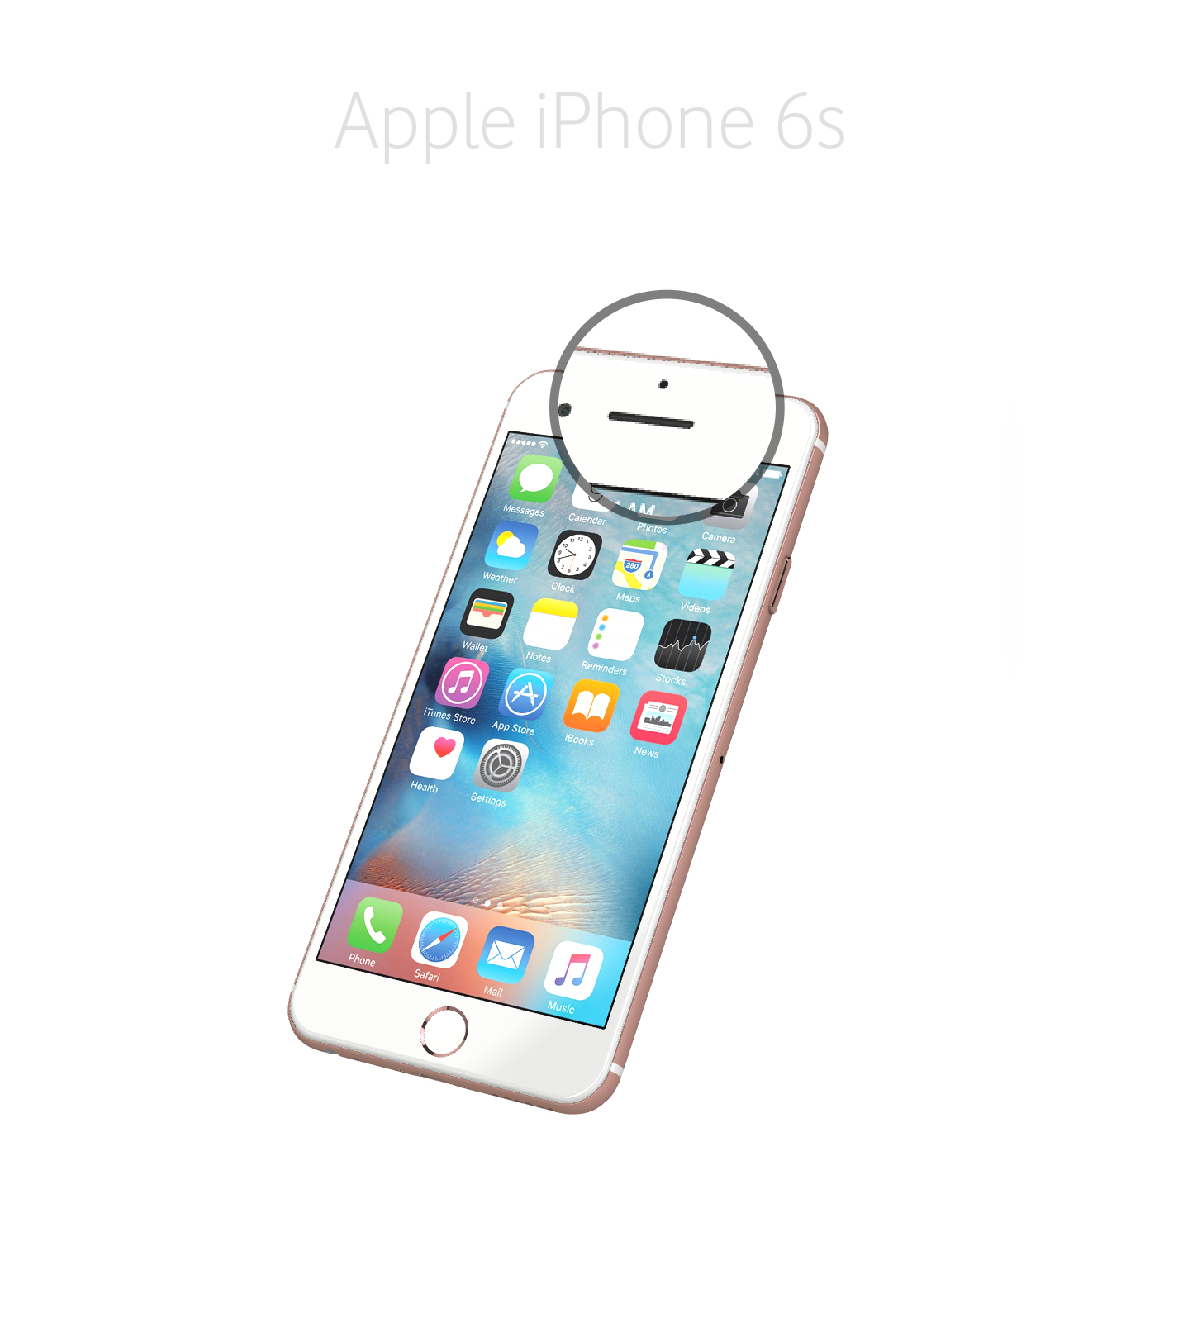 Laga samtalshögtalare iPhone 6s